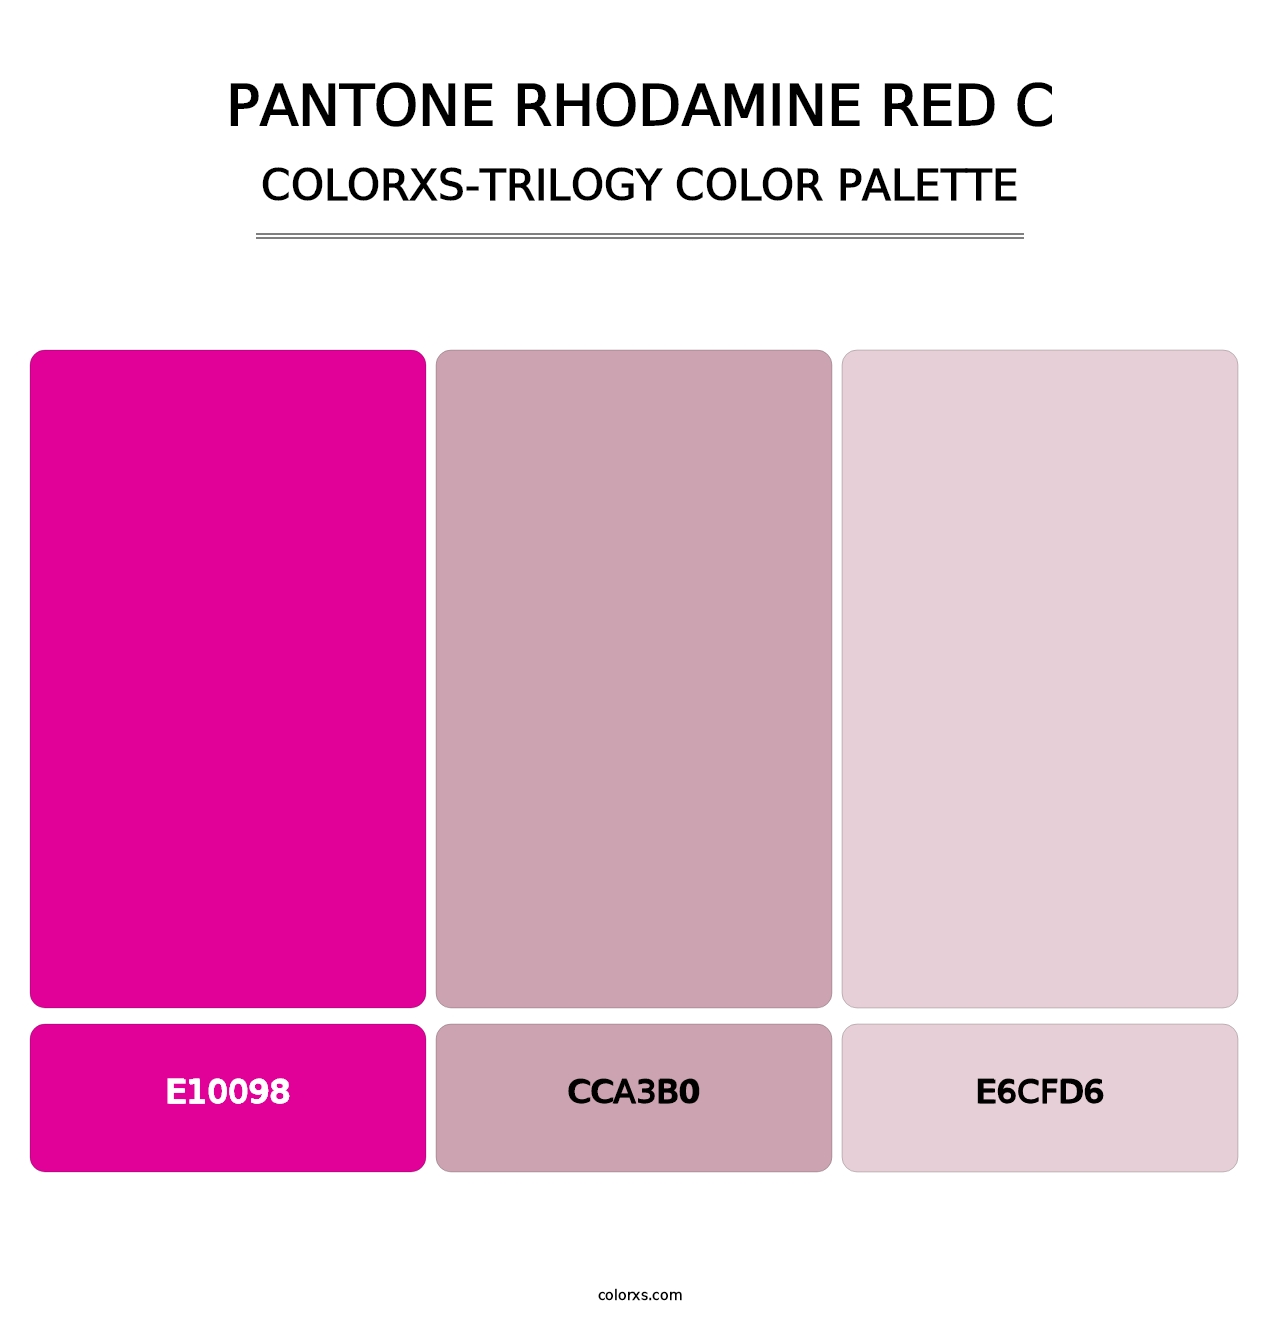 PANTONE Rhodamine Red C - Colorxs Trilogy Palette